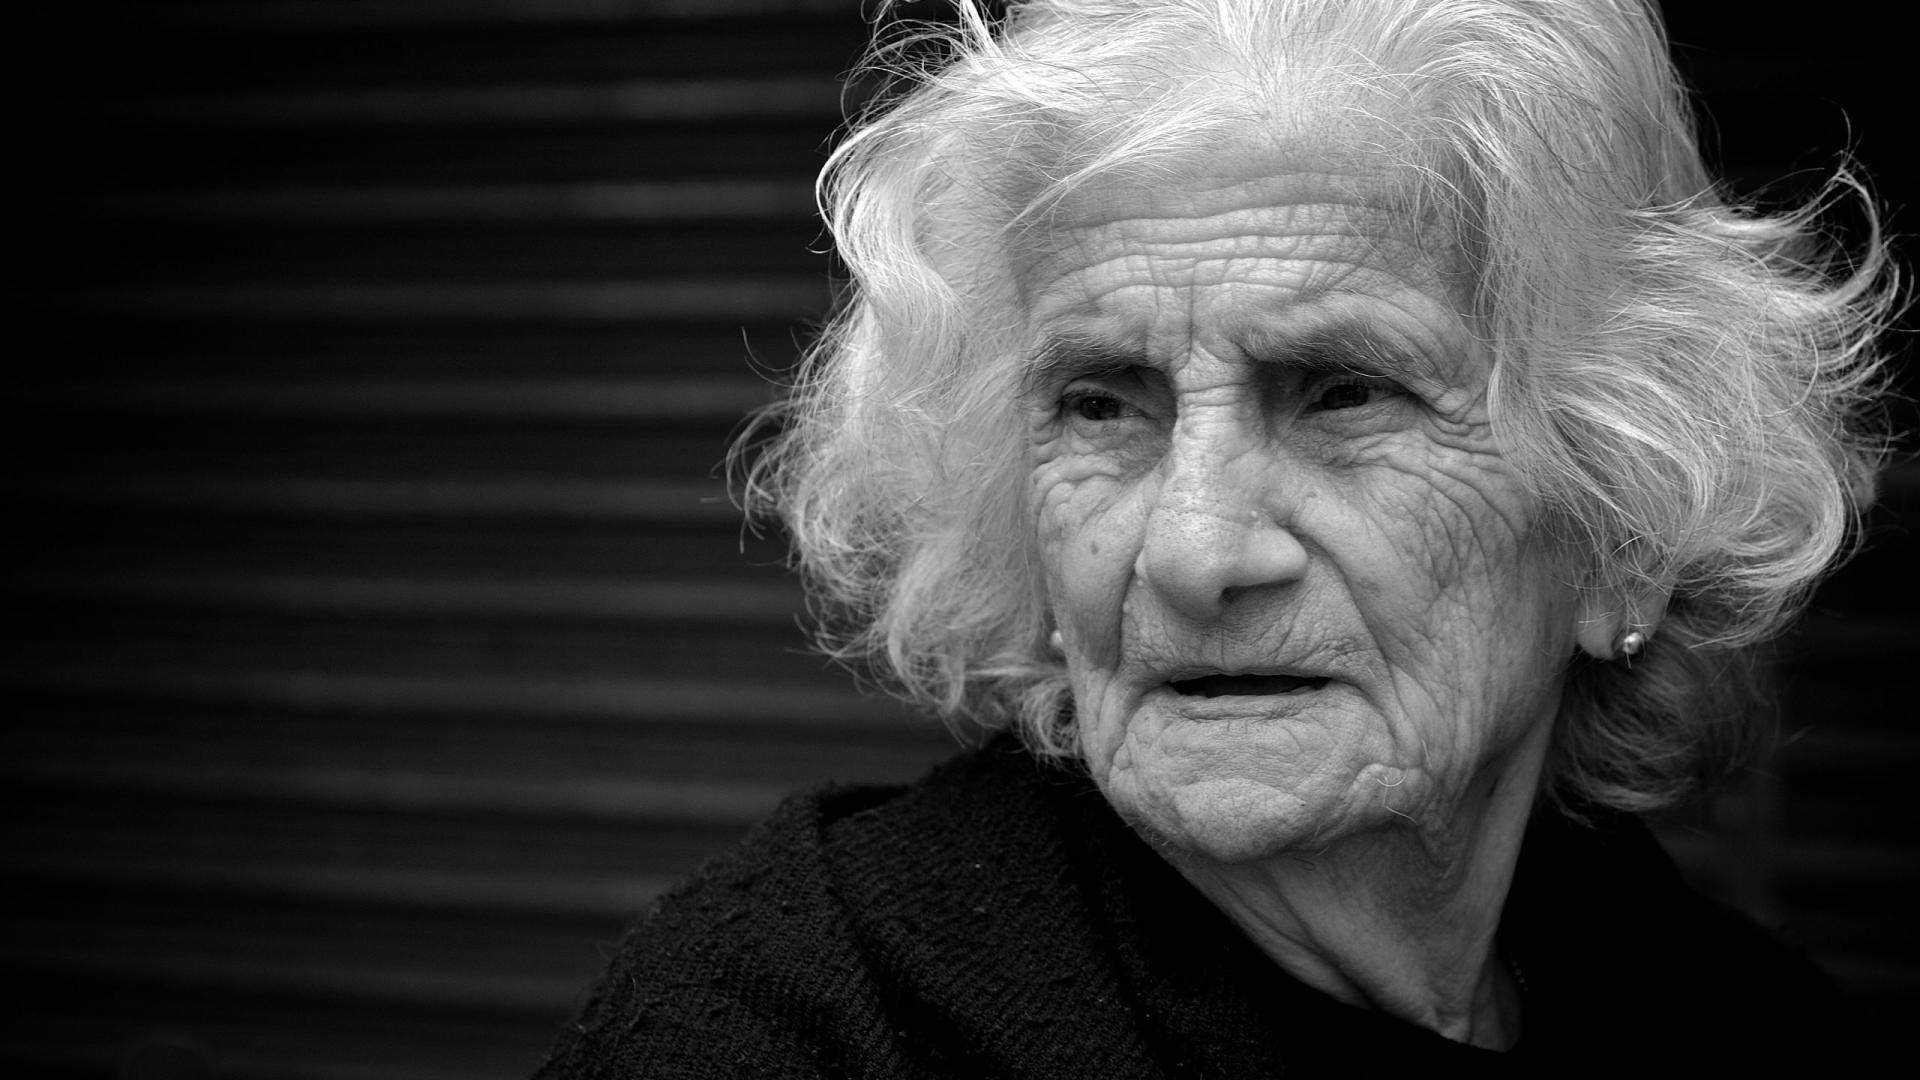 Caption: Ageless Beauty: Portrait of a Stunning Older Woman Wallpaper